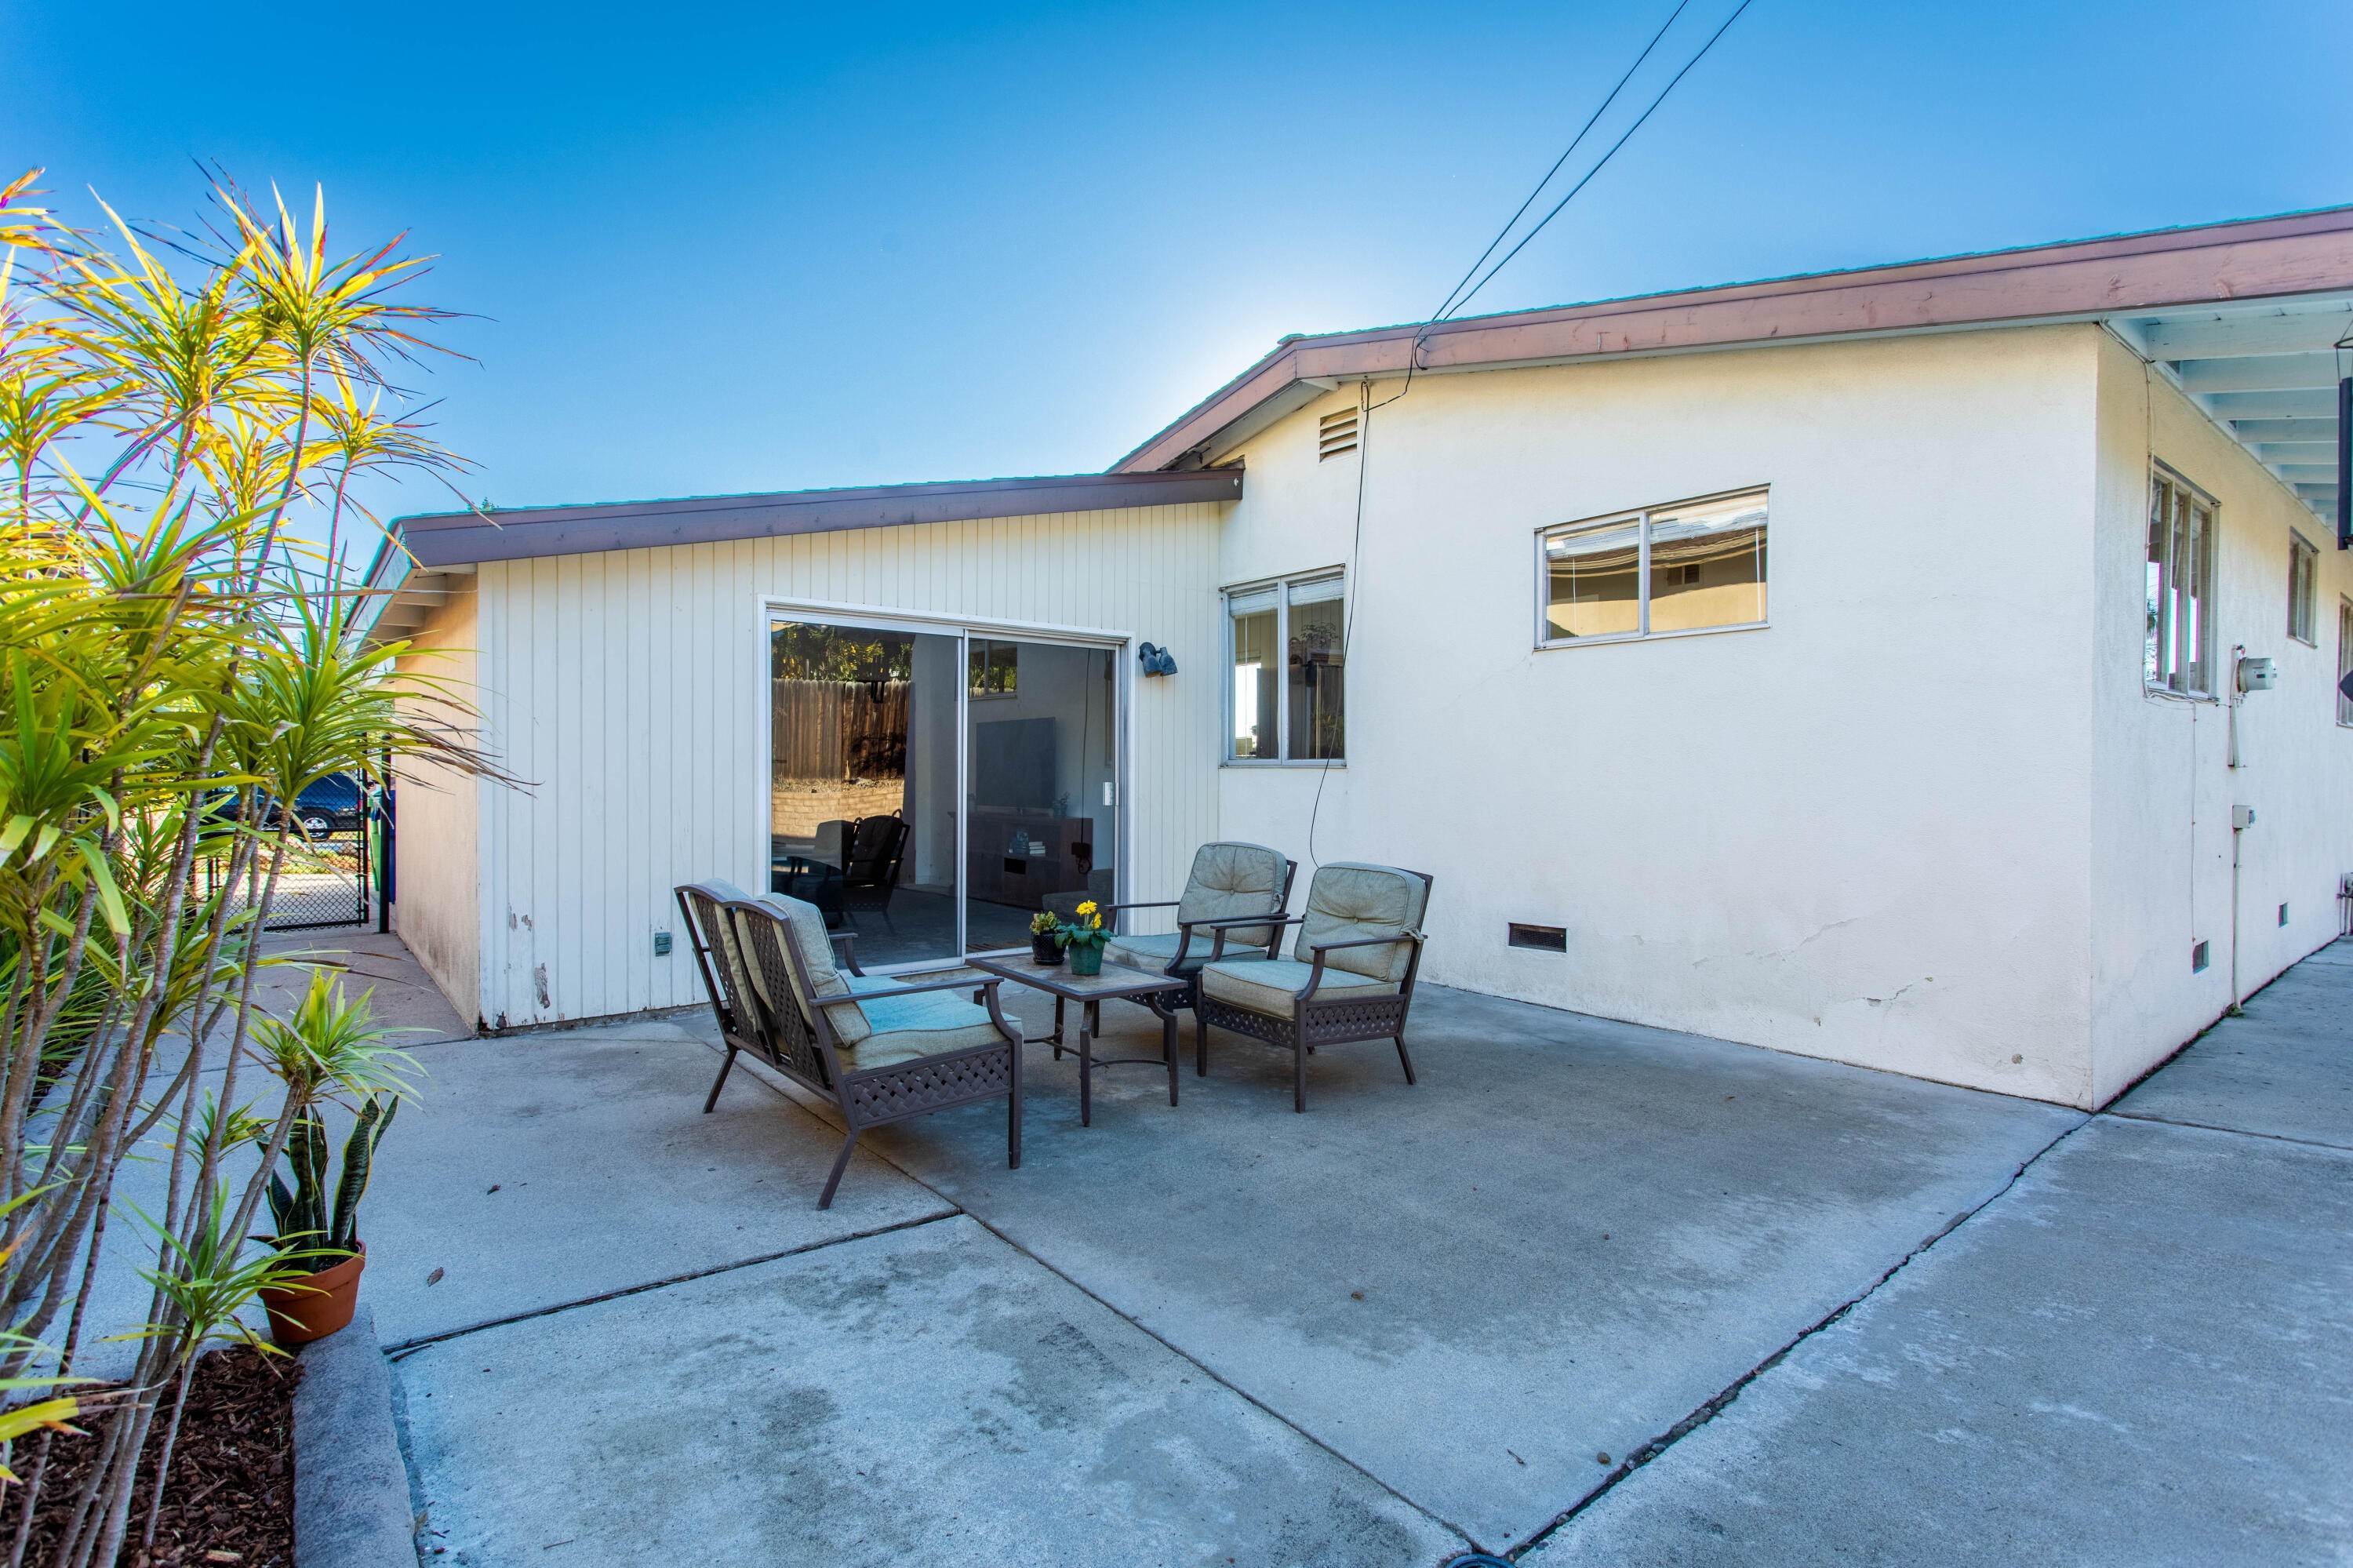 15. Estate for Sale at 673 Ardmore Drive Goleta, California 93117 United States